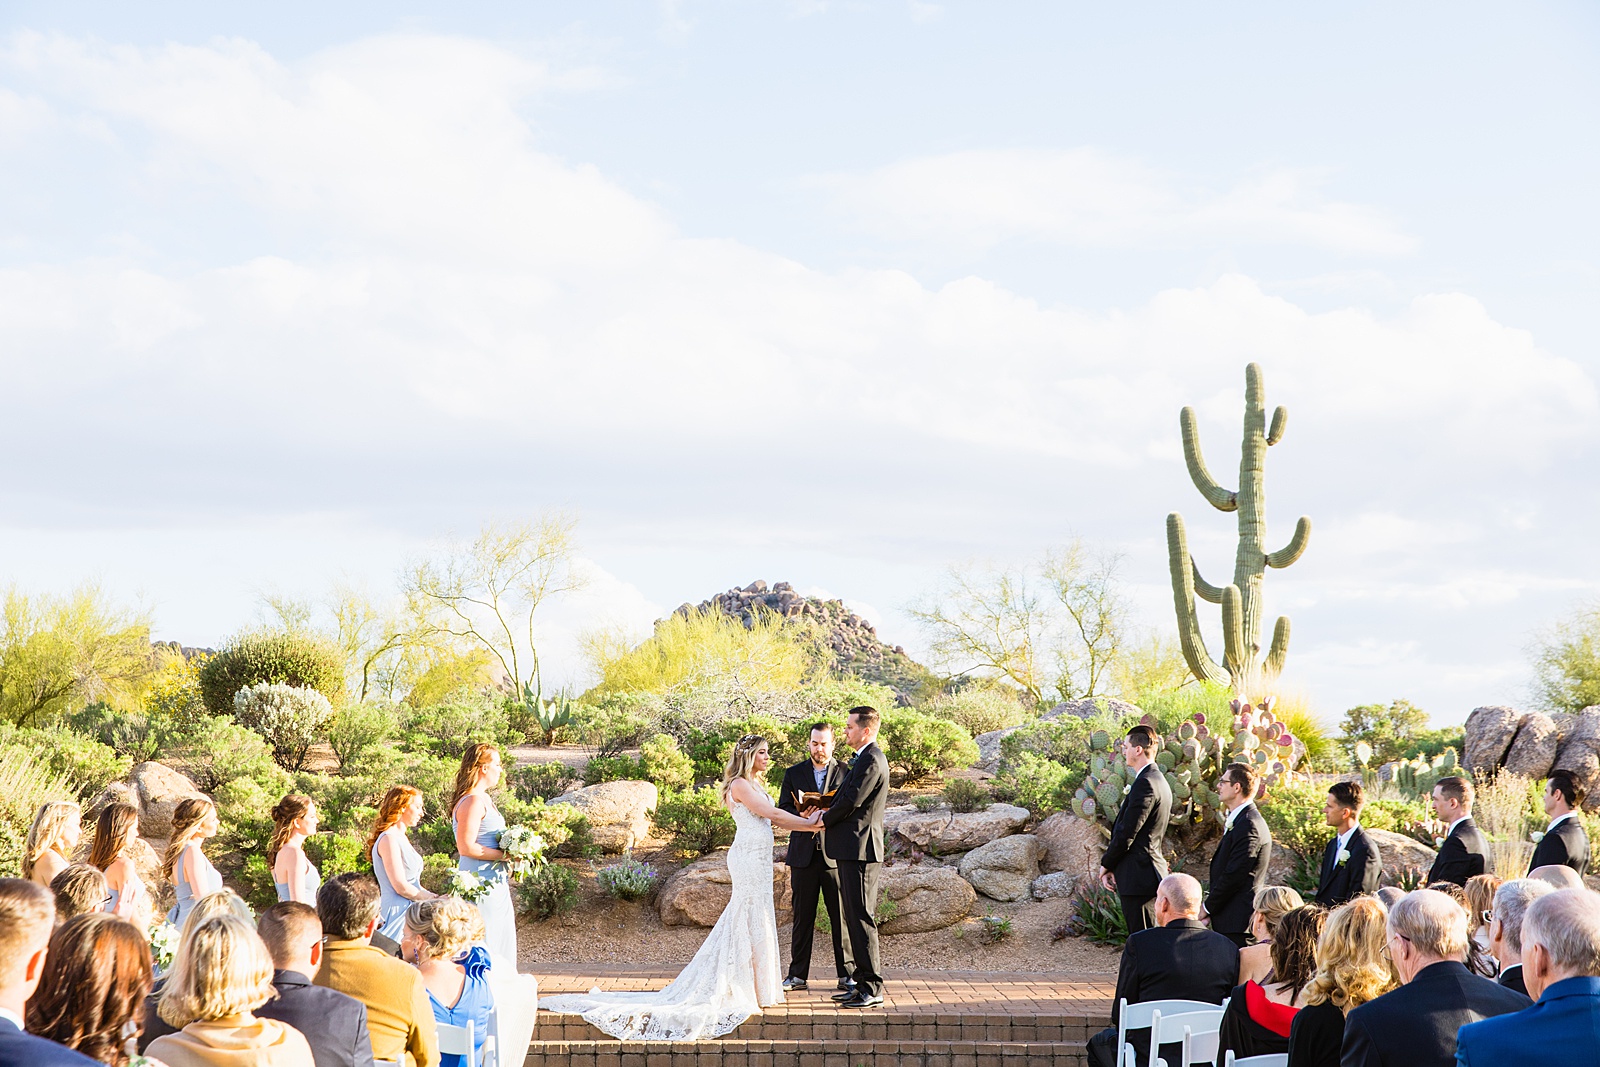 Wedding ceremony at Troon North by Phoenix wedding photographer PMA Photography.